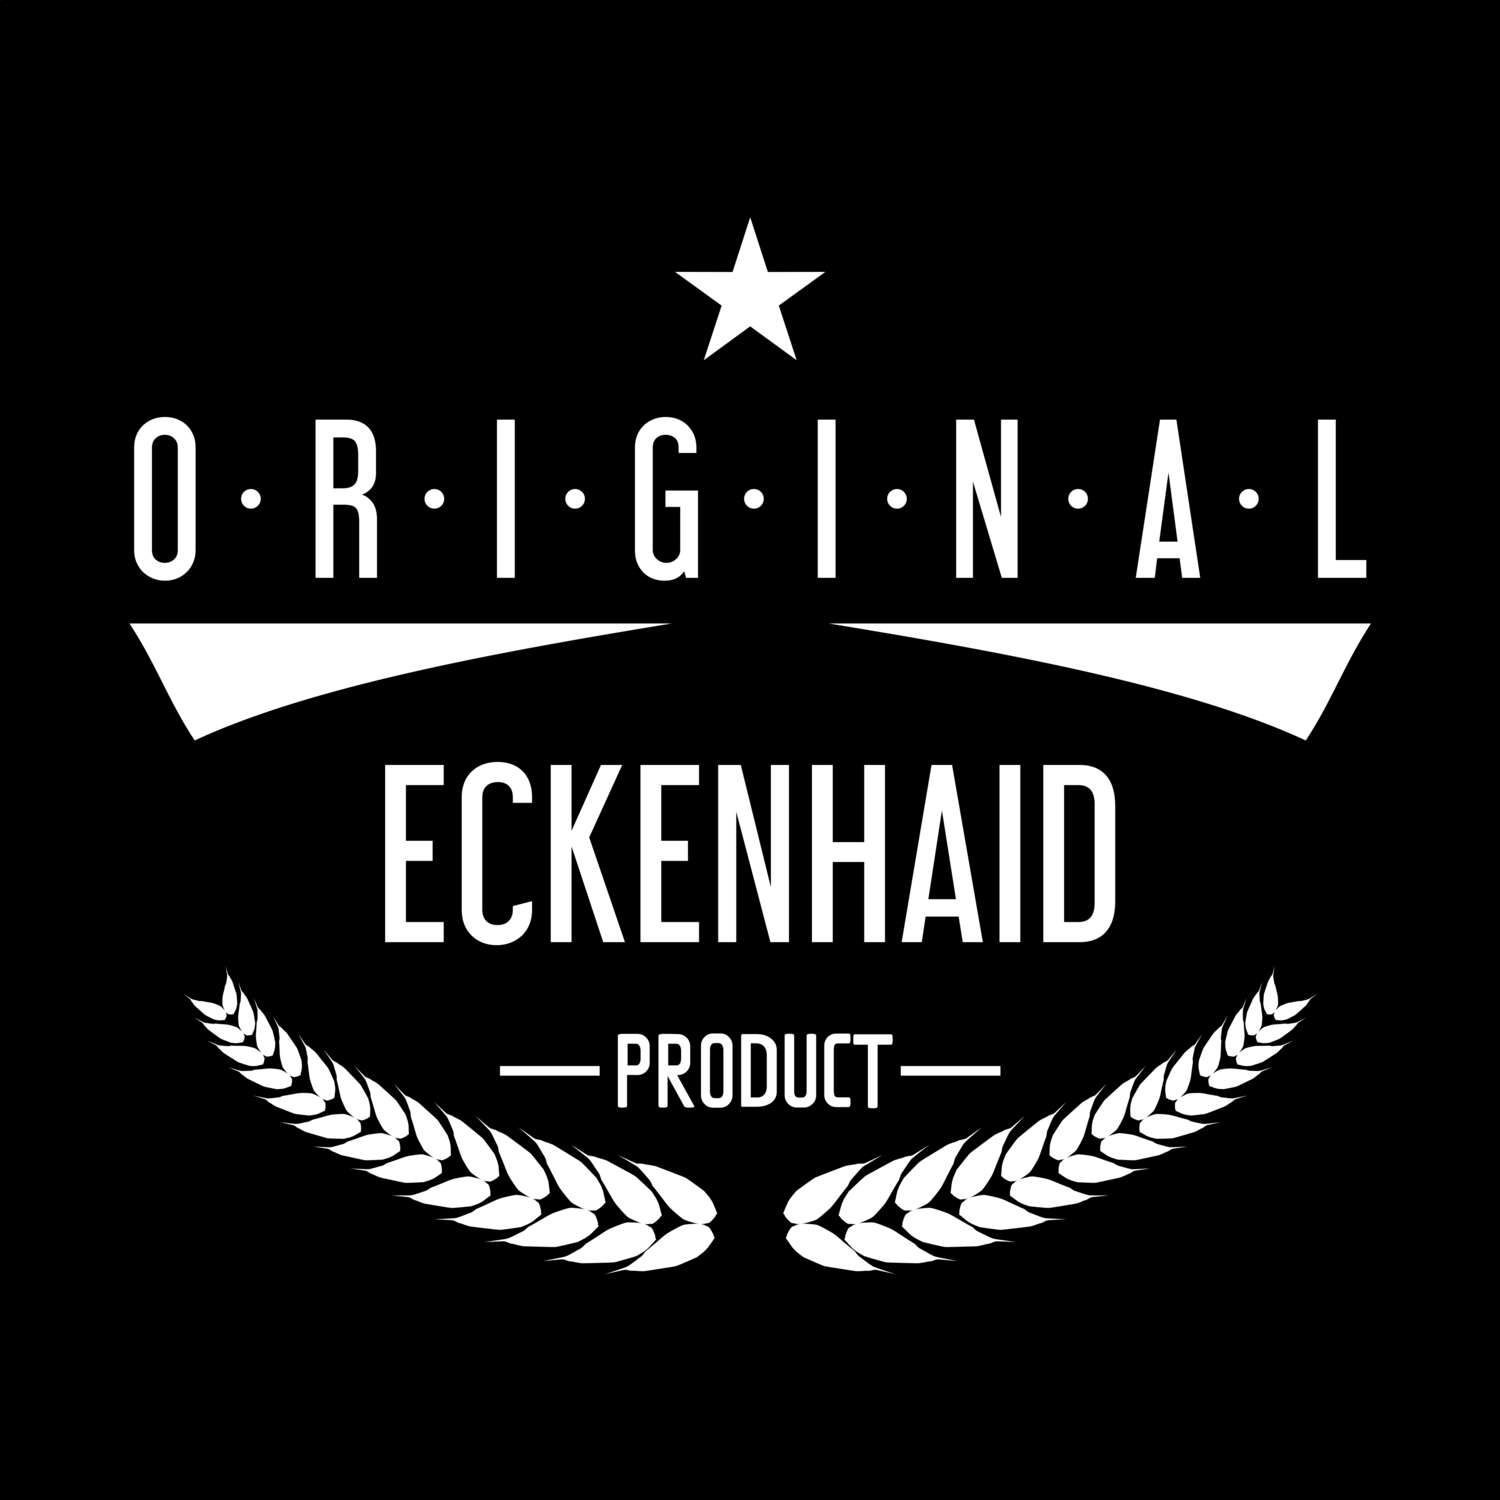 Eckenhaid T-Shirt »Original Product«